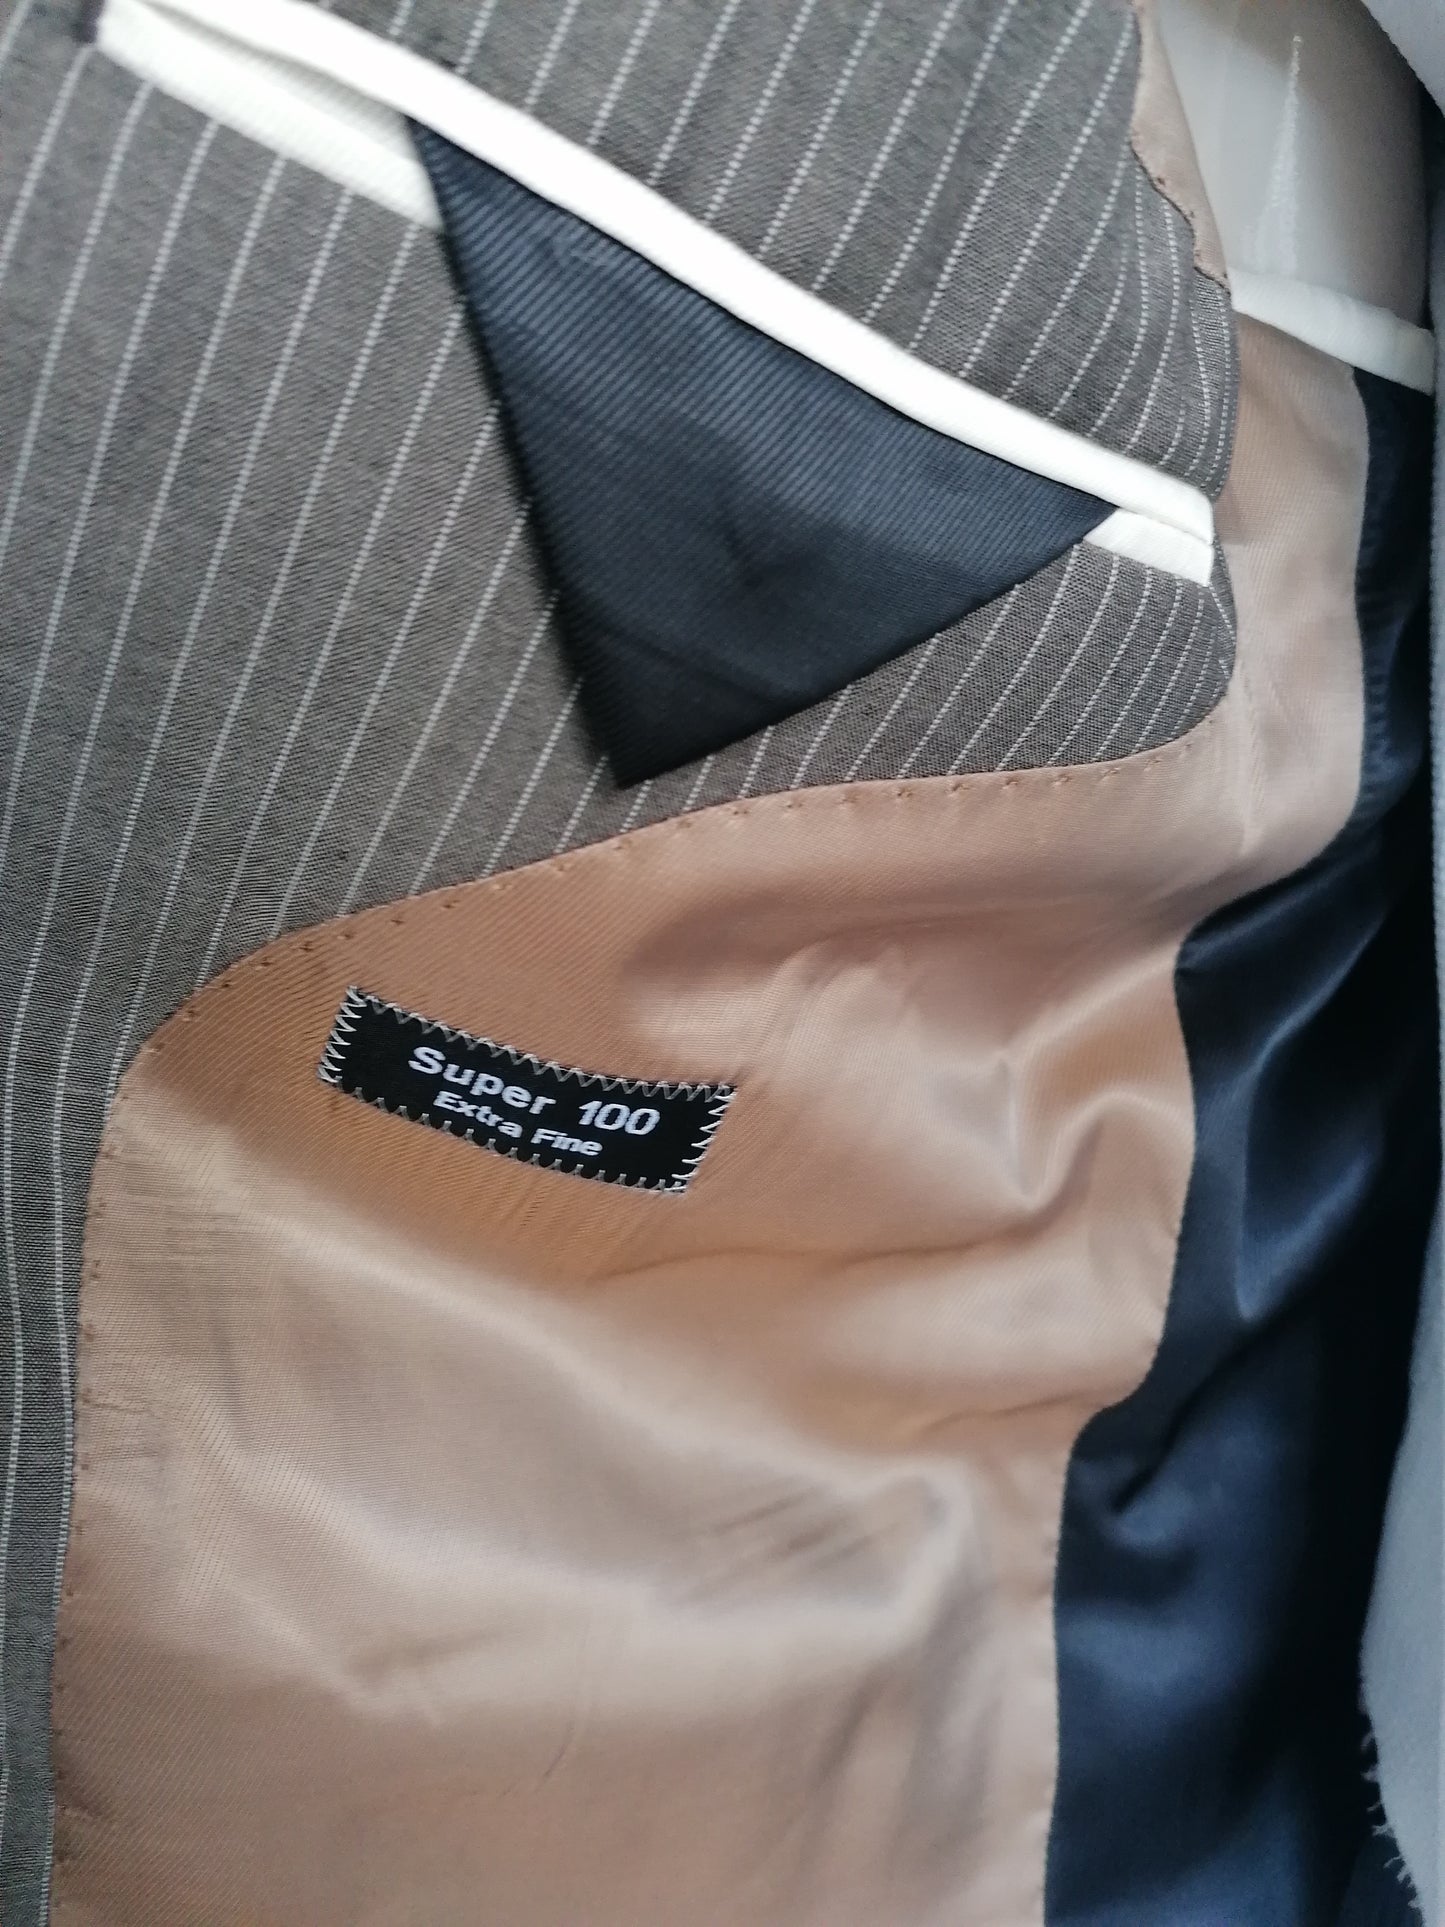 Luigi jacket. Brown white striped. Size 56 / XL. Regular fit. Super 100's